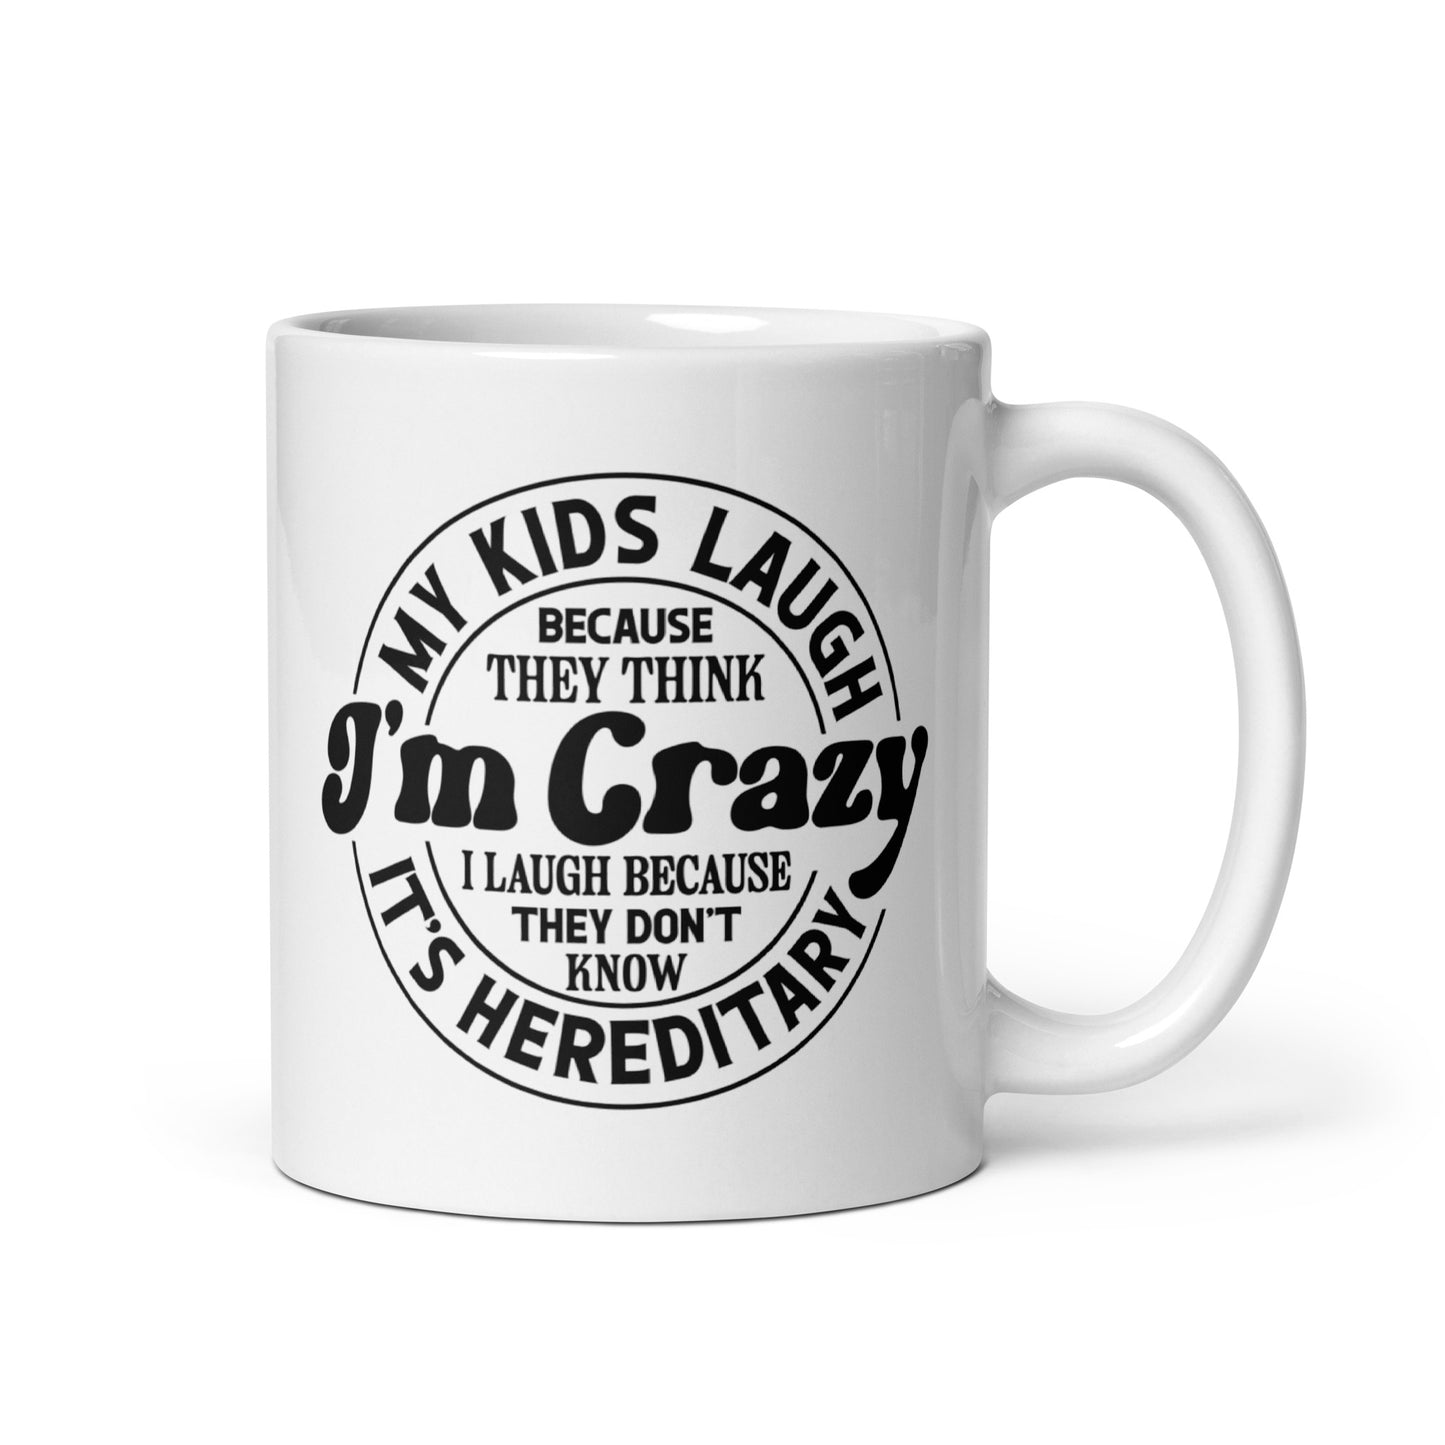 My Kids Laugh Because They Think I'm Crazy White Ceramic Coffee Mug